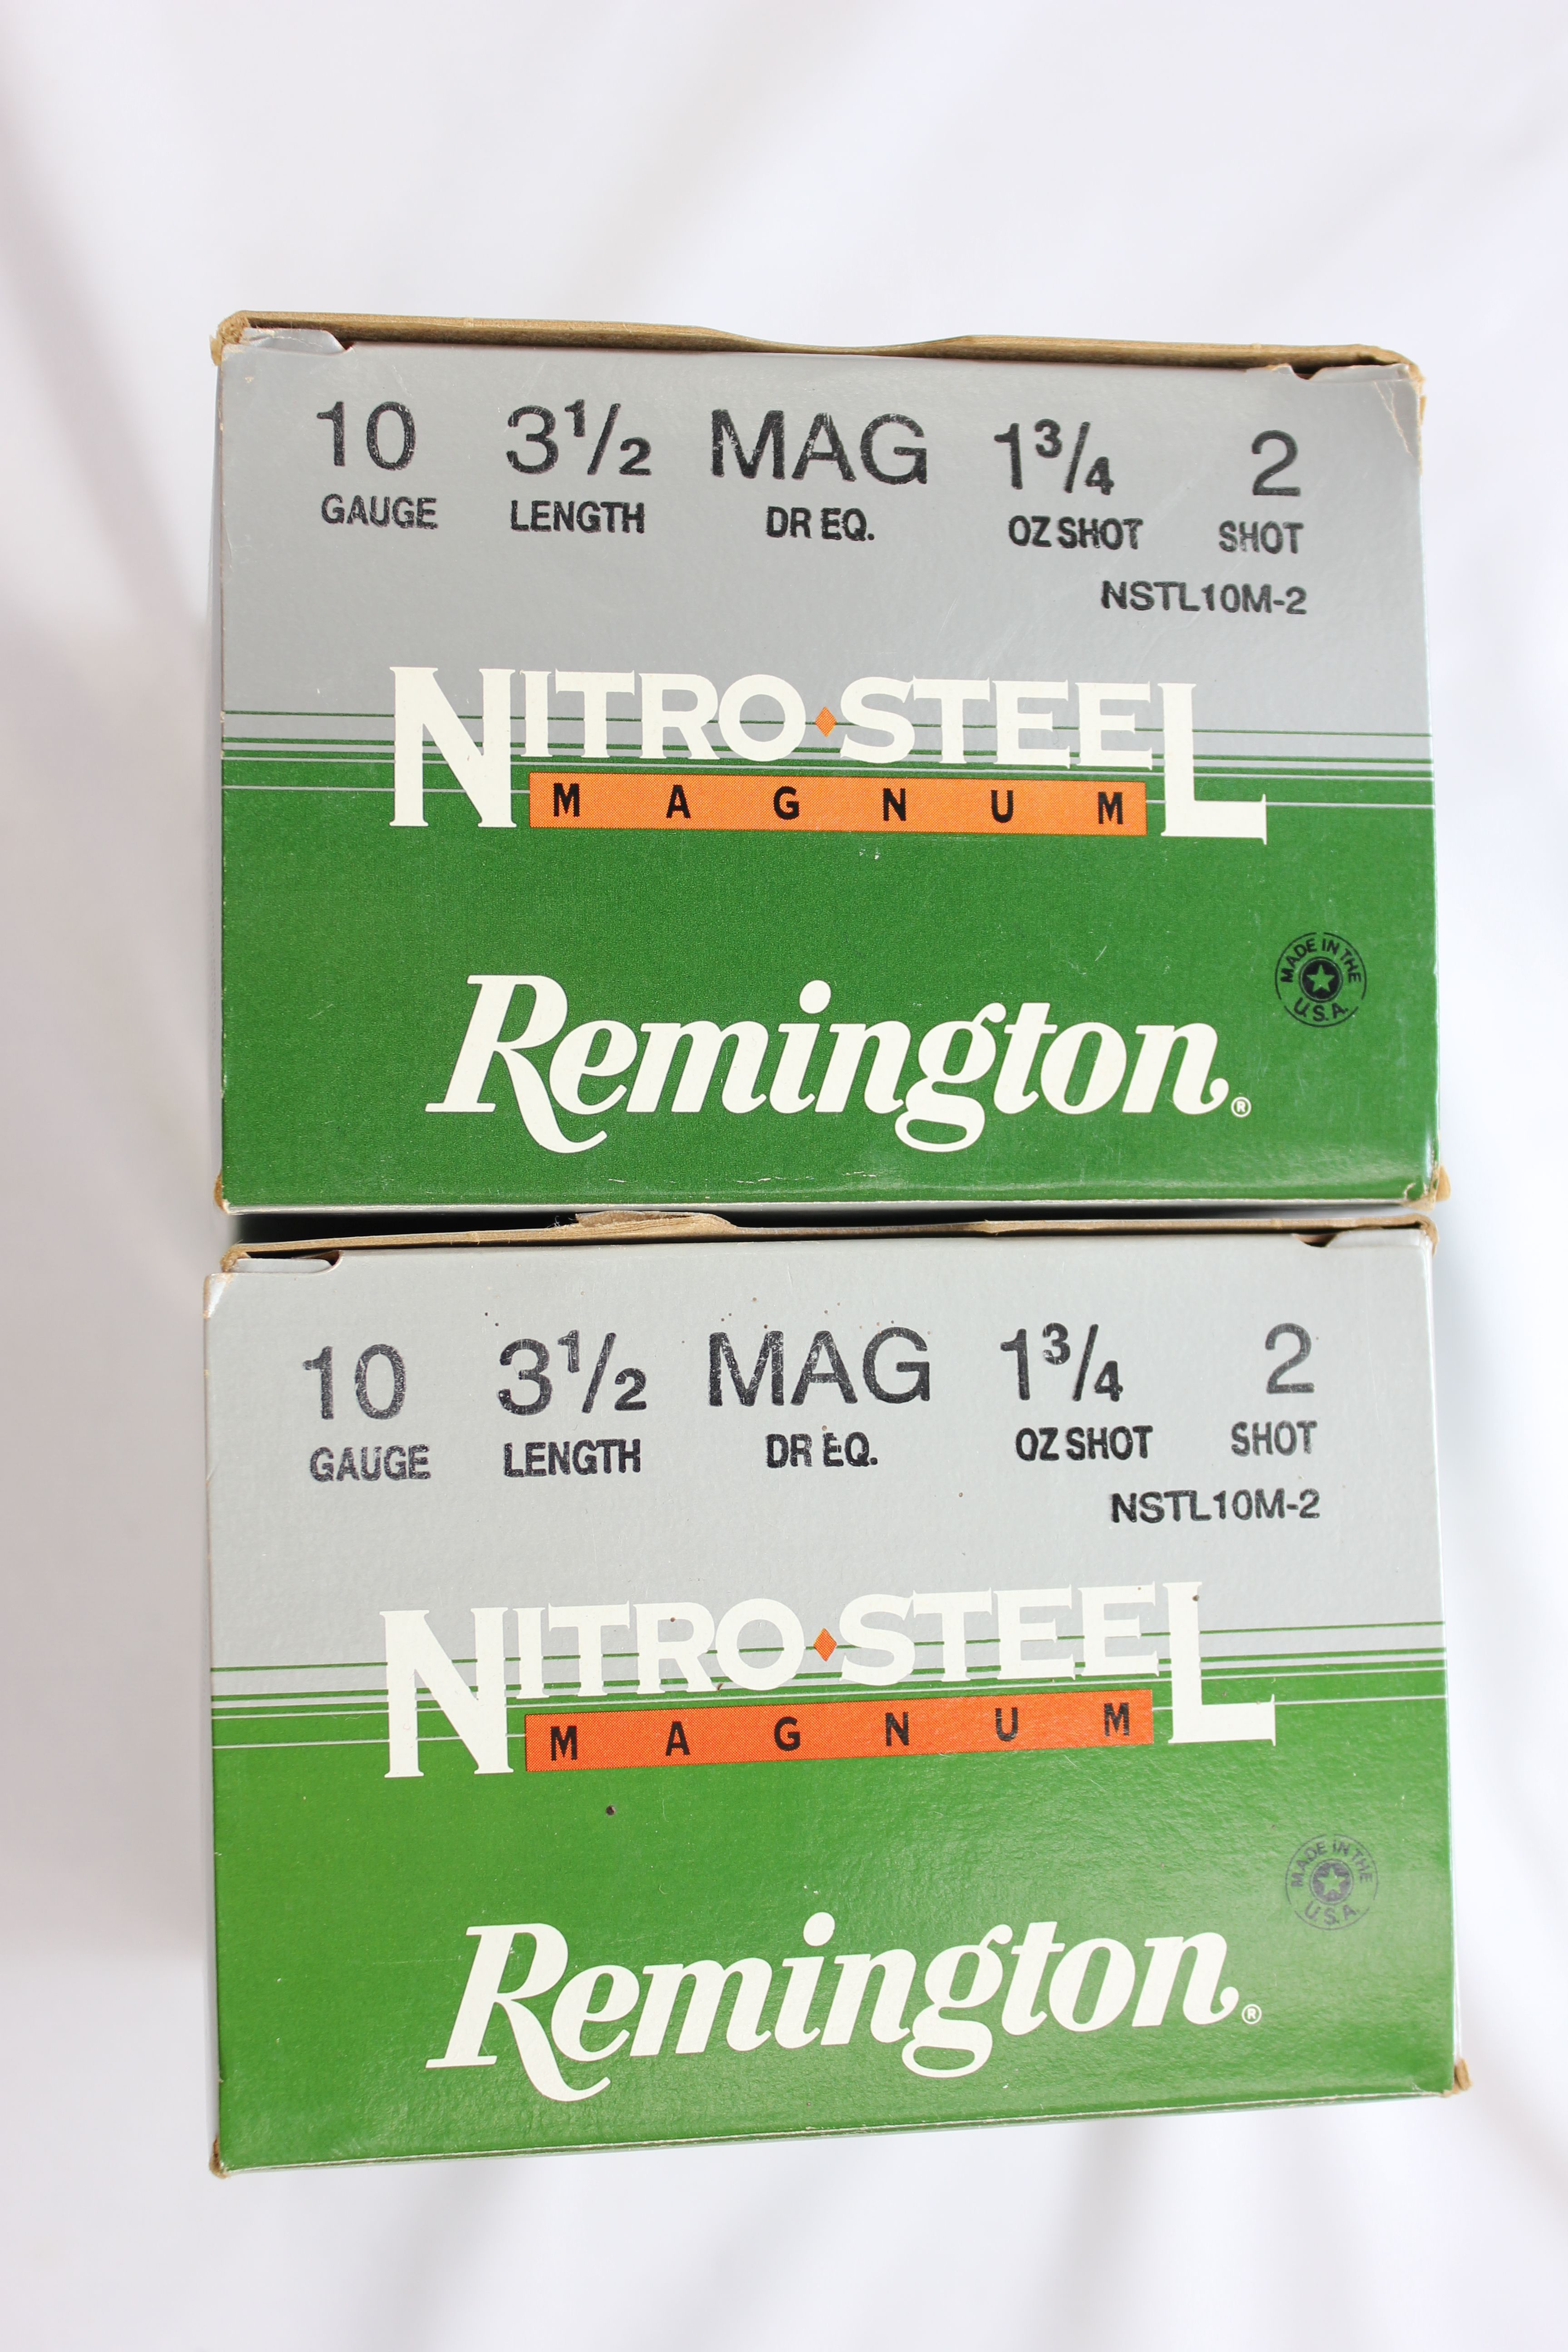 Remington Nitro Steel Shot, 12 Gauge, 3 Shell, 1 3/8 ozs., 25